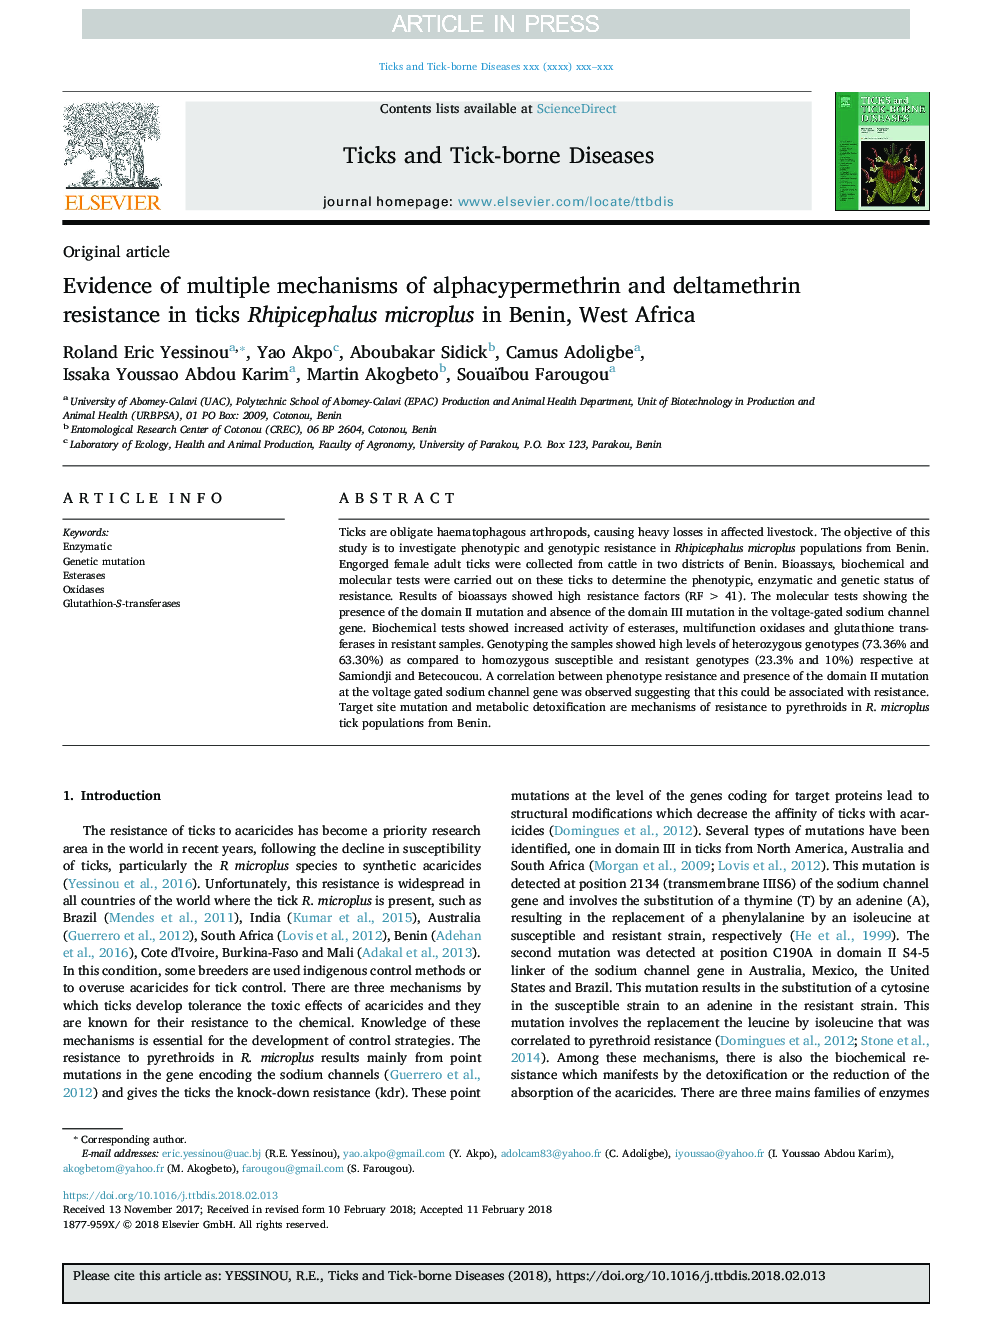 Evidence of multiple mechanisms of alphacypermethrin and deltamethrin resistance in ticks Rhipicephalus microplus in Benin, West Africa